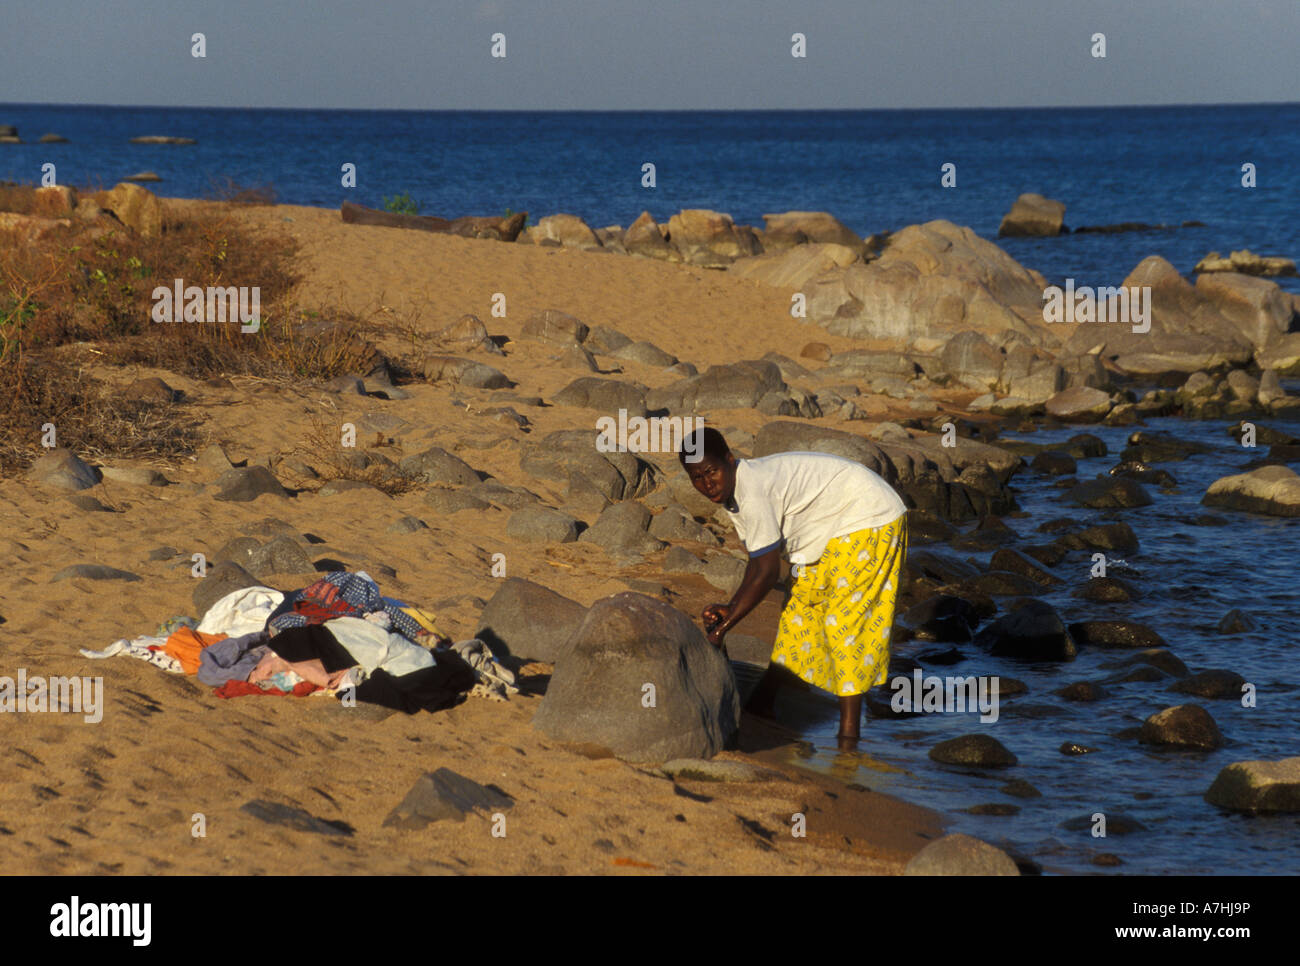 Frau Wäsche waschen im See, Likoma Island, Lake Malawi, Malawi Stockfoto